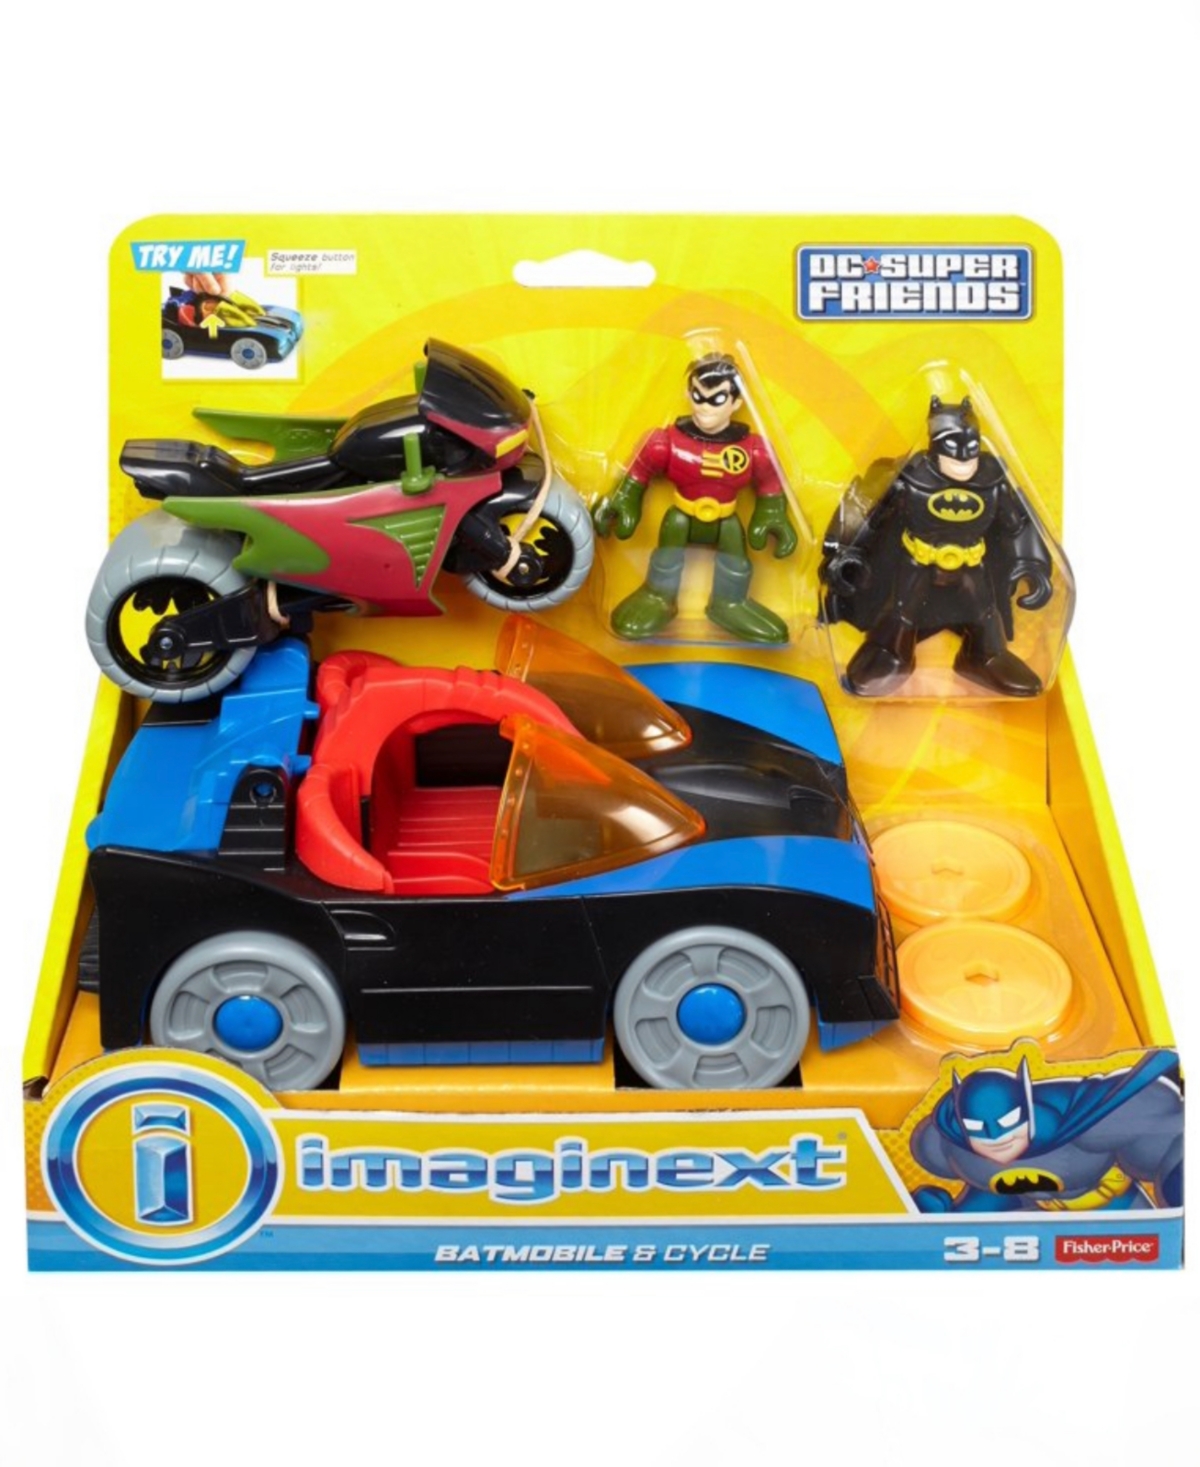 Imaginext Kids' Dc Super Friends Batmobile Cycle In Multi Colored